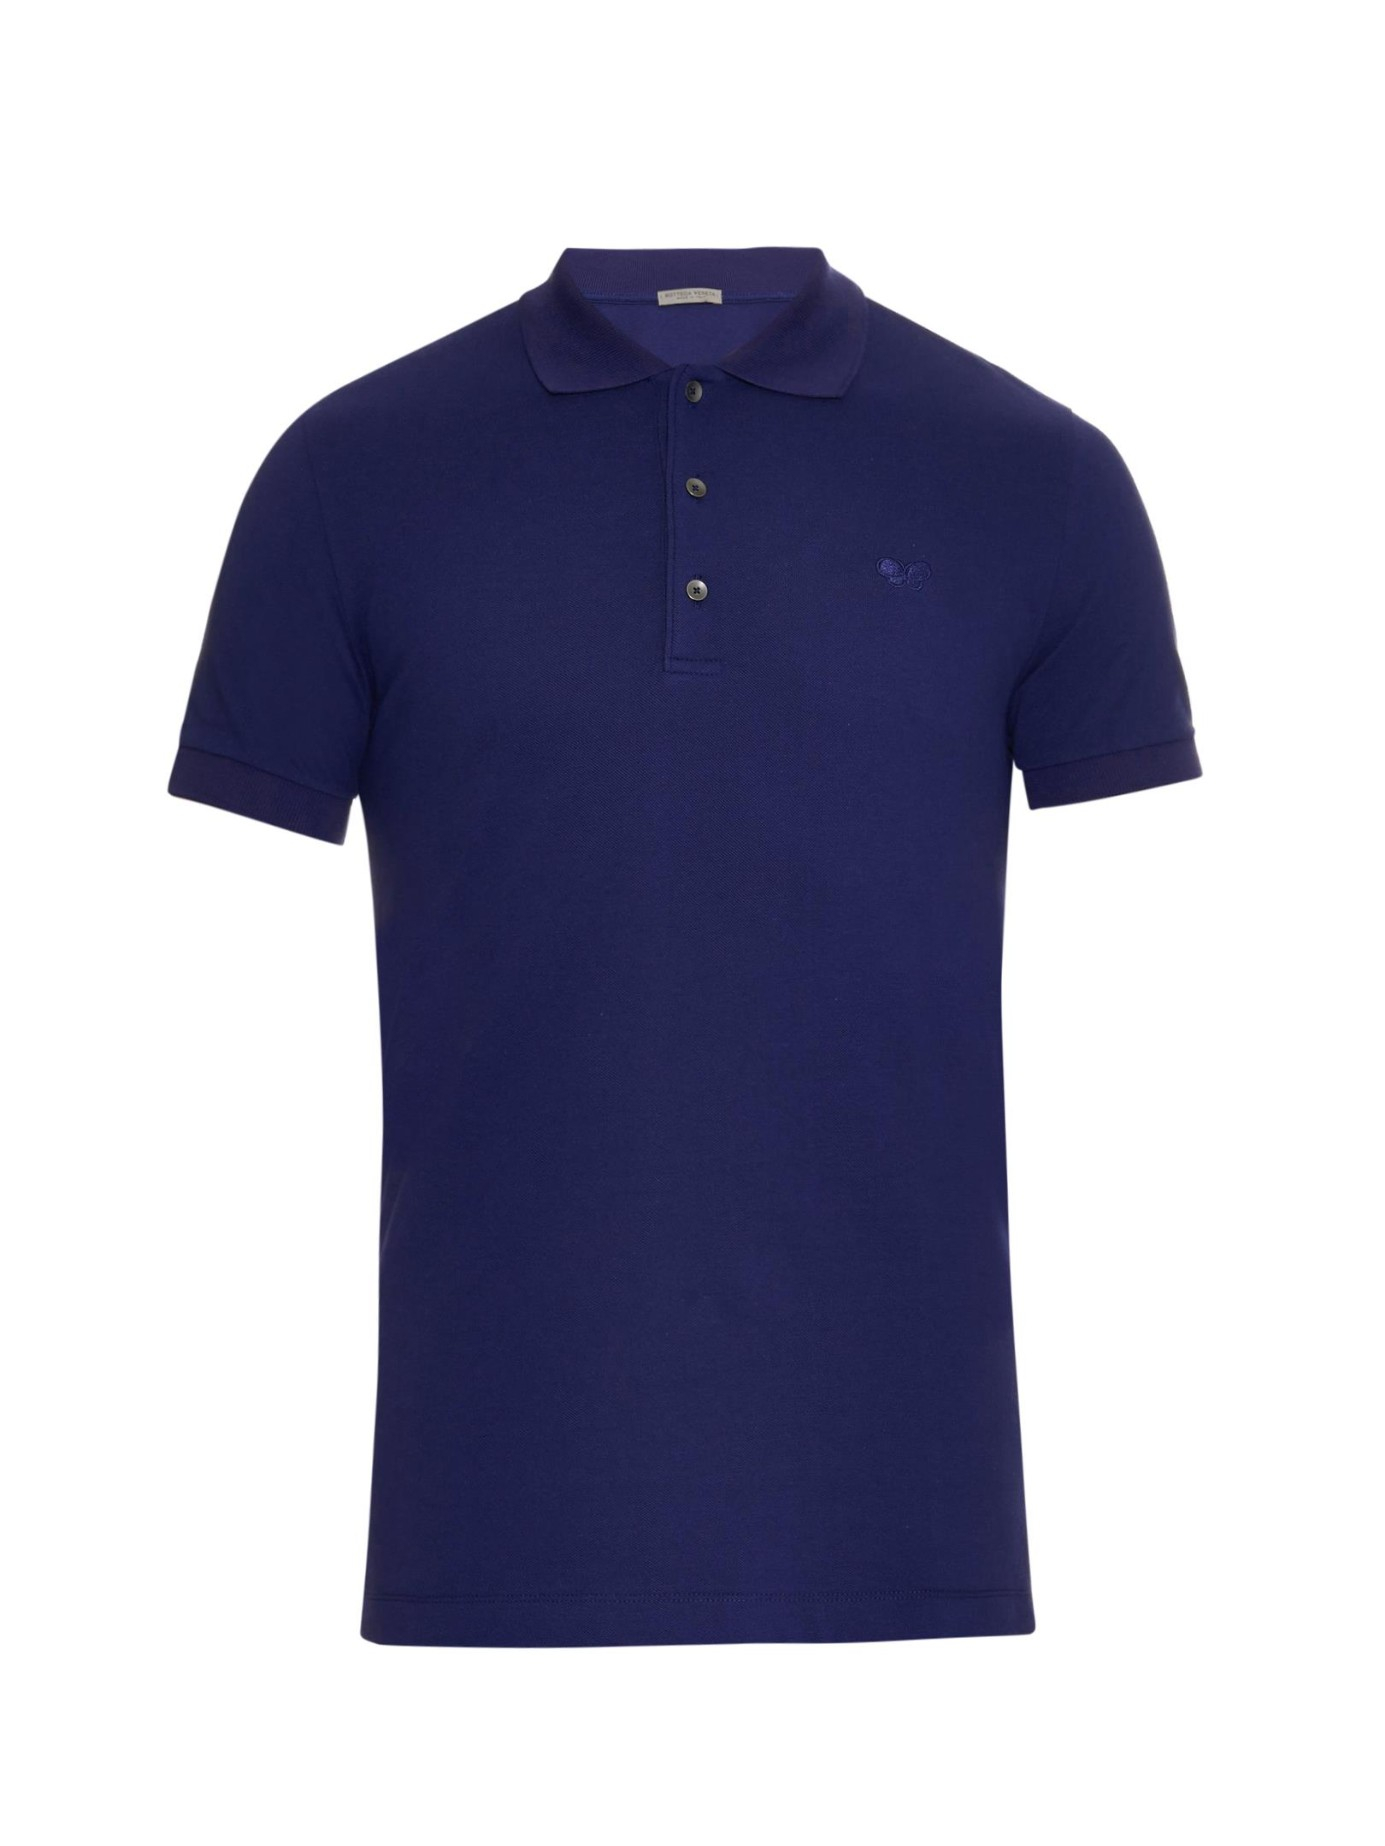 Bottega Veneta Cotton-Piqué Polo Shirt in Blue for Men - Lyst